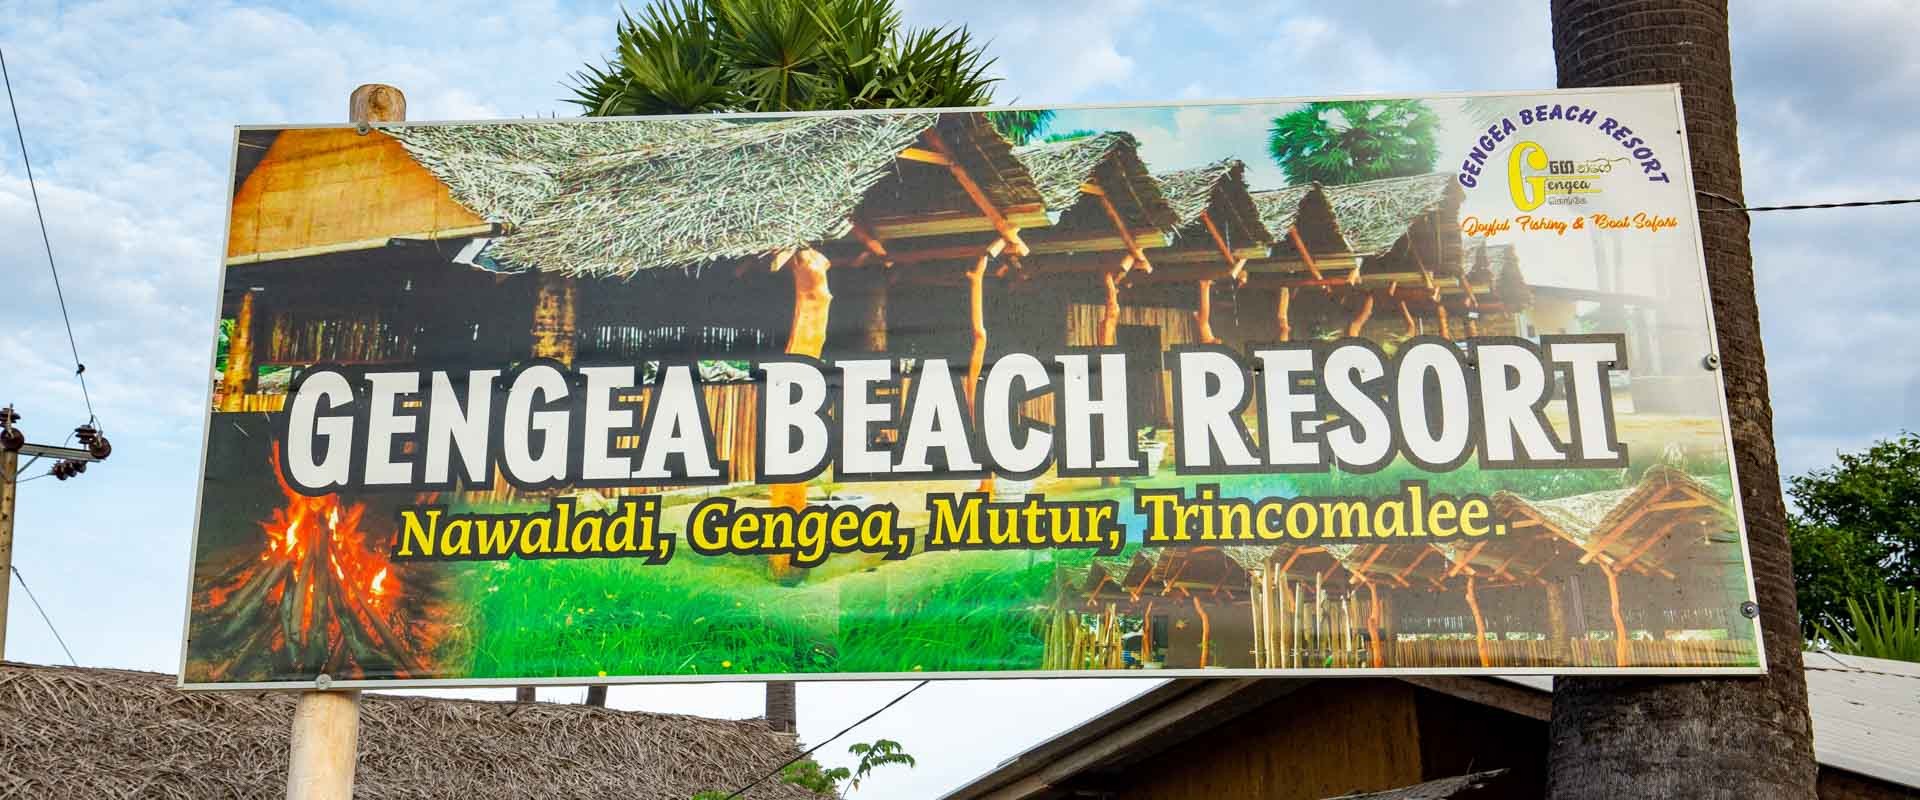 Gengea Beach Resort - Gateway to East